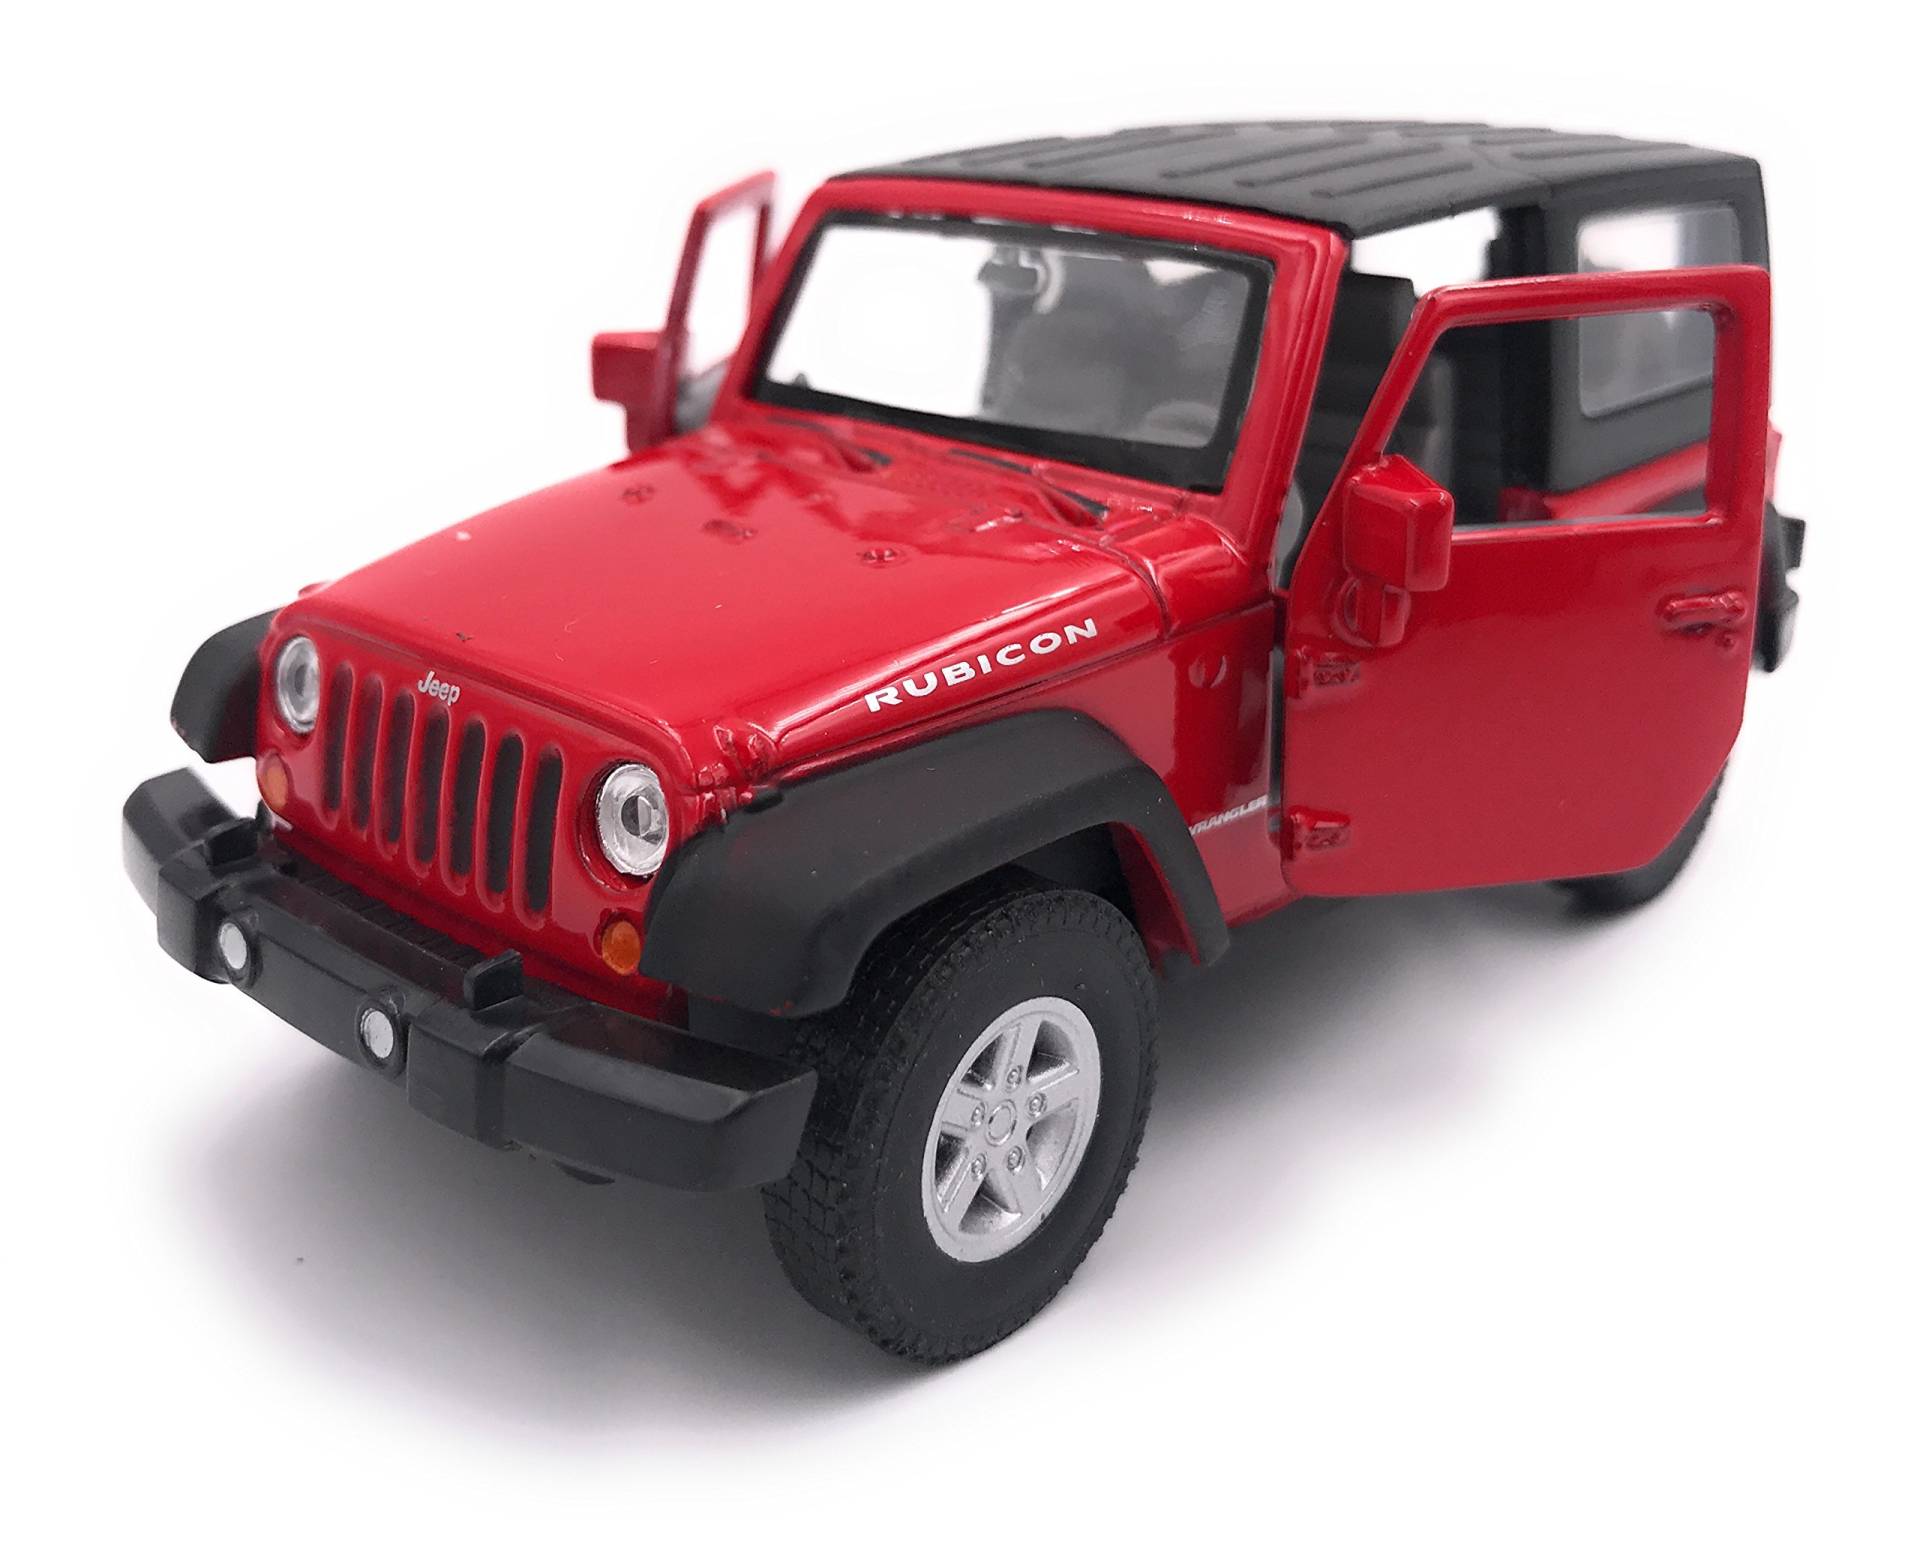 H-Customs Jeep Wrangler Rubicon Modellauto Auto Lizenzprodukt 1:34-1:39 rot zu von H-Customs